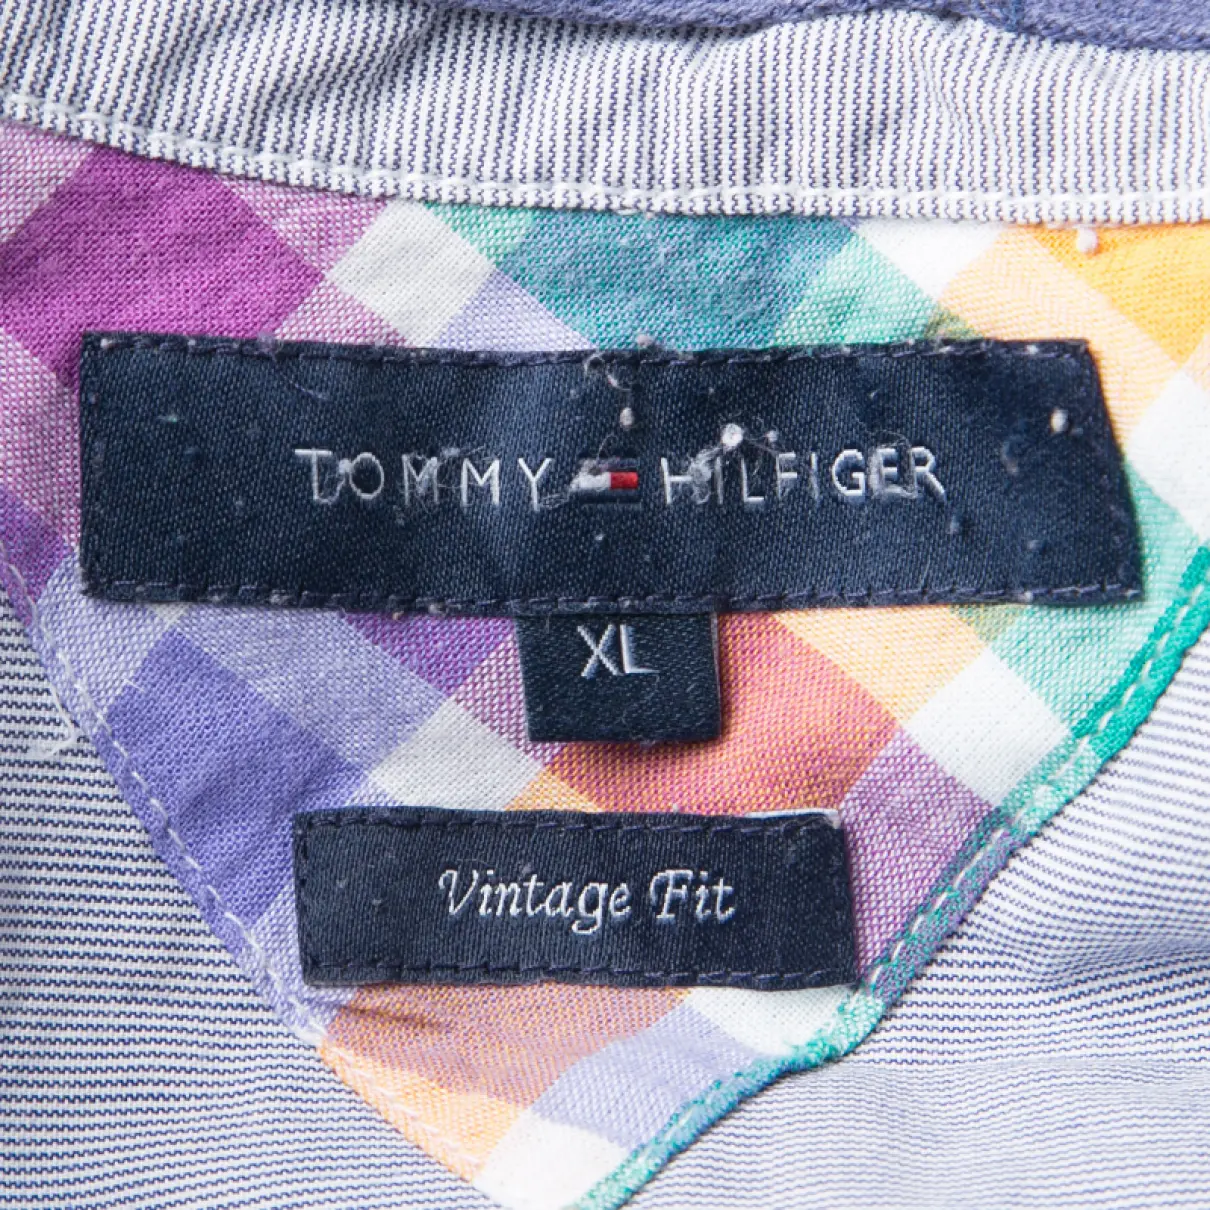 Cotton Top Tommy Hilfiger